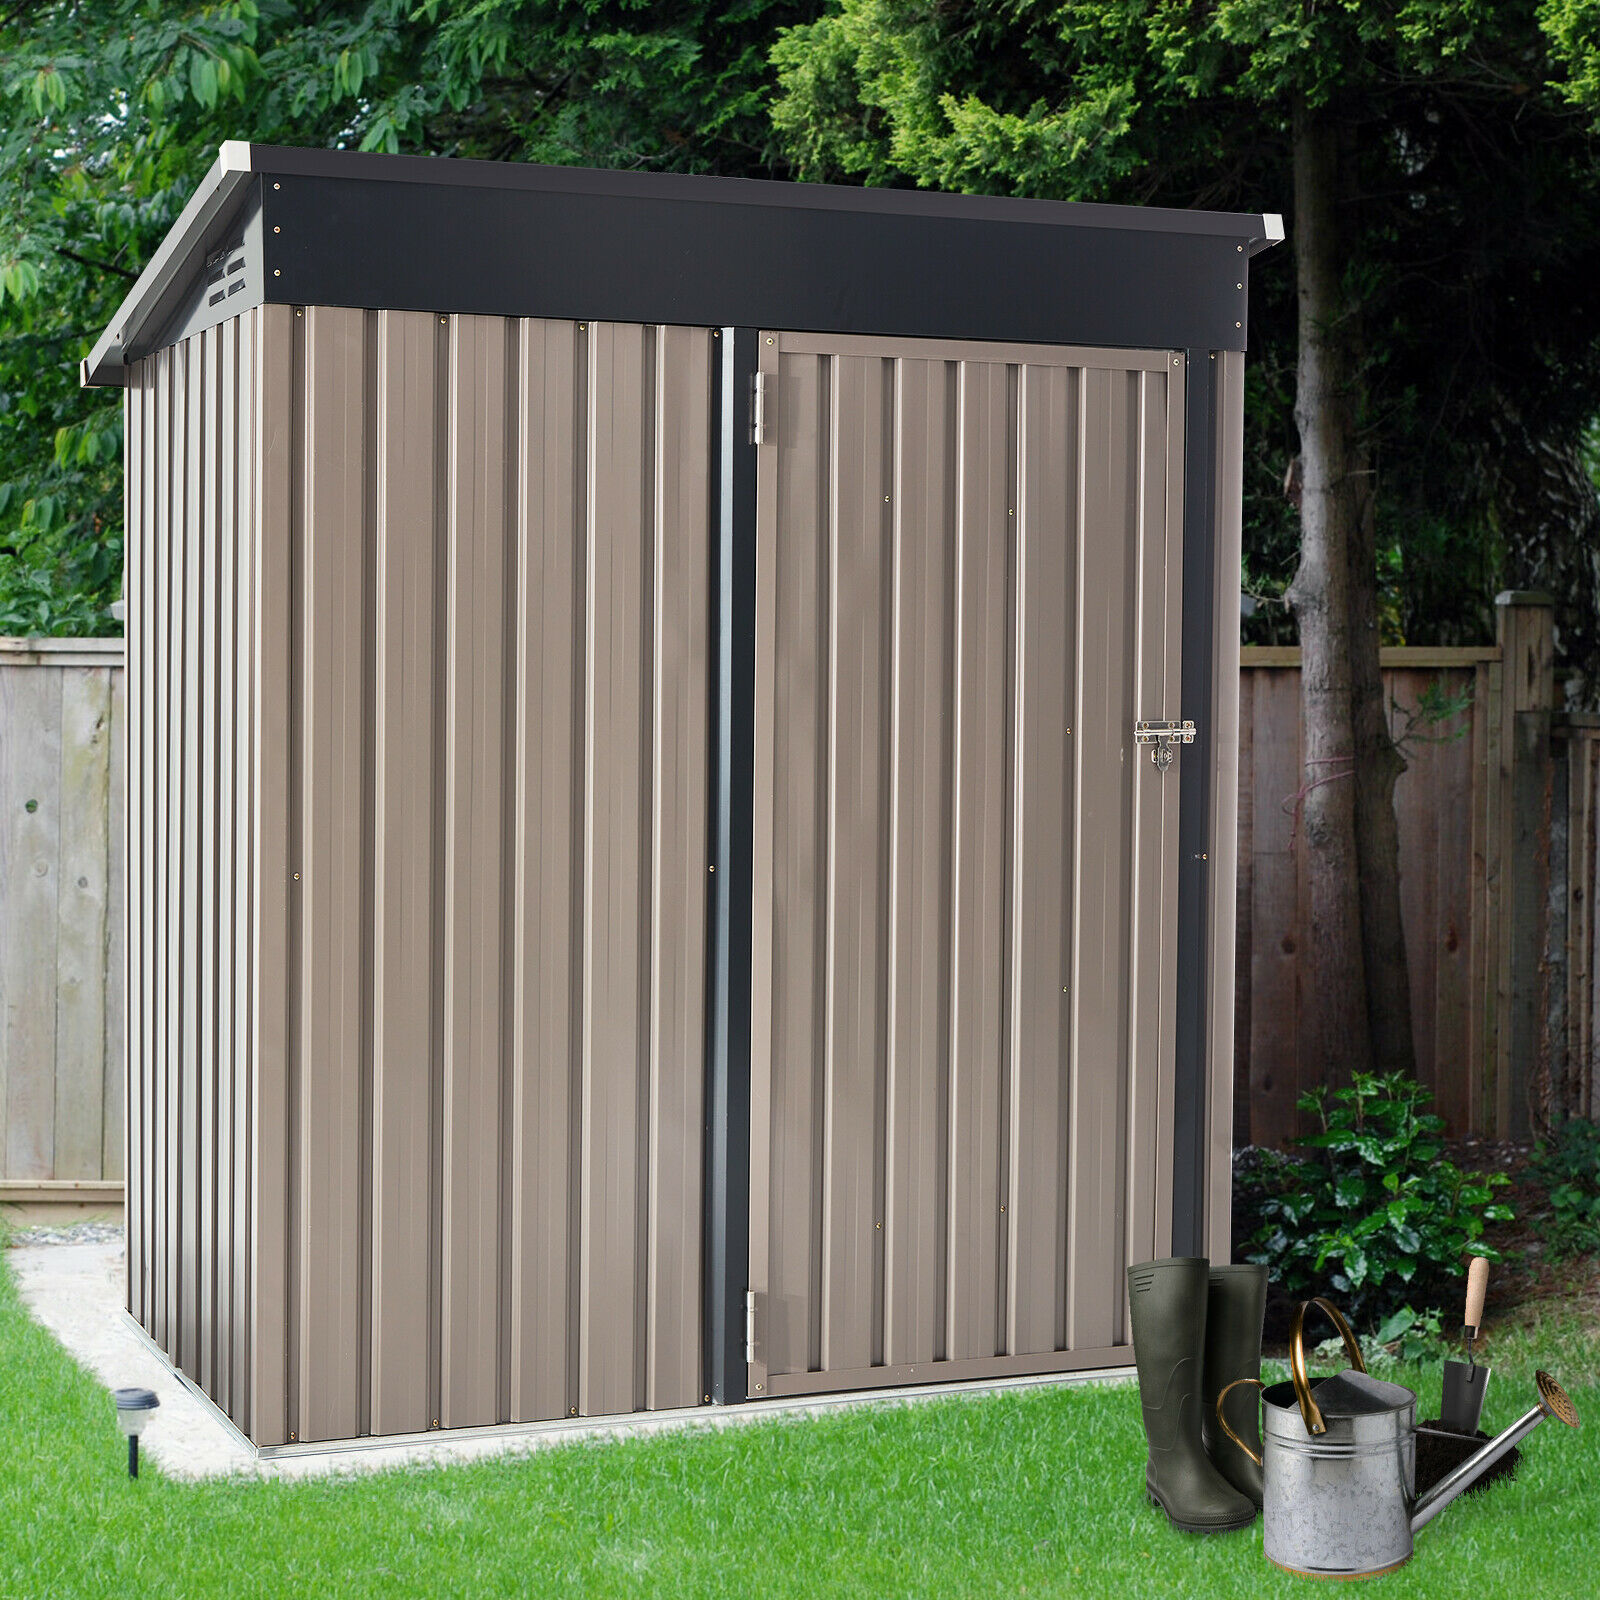 Aecojoy Outdoor Metal Storage Shed W/ Single Lockable Door For Backyard Garden